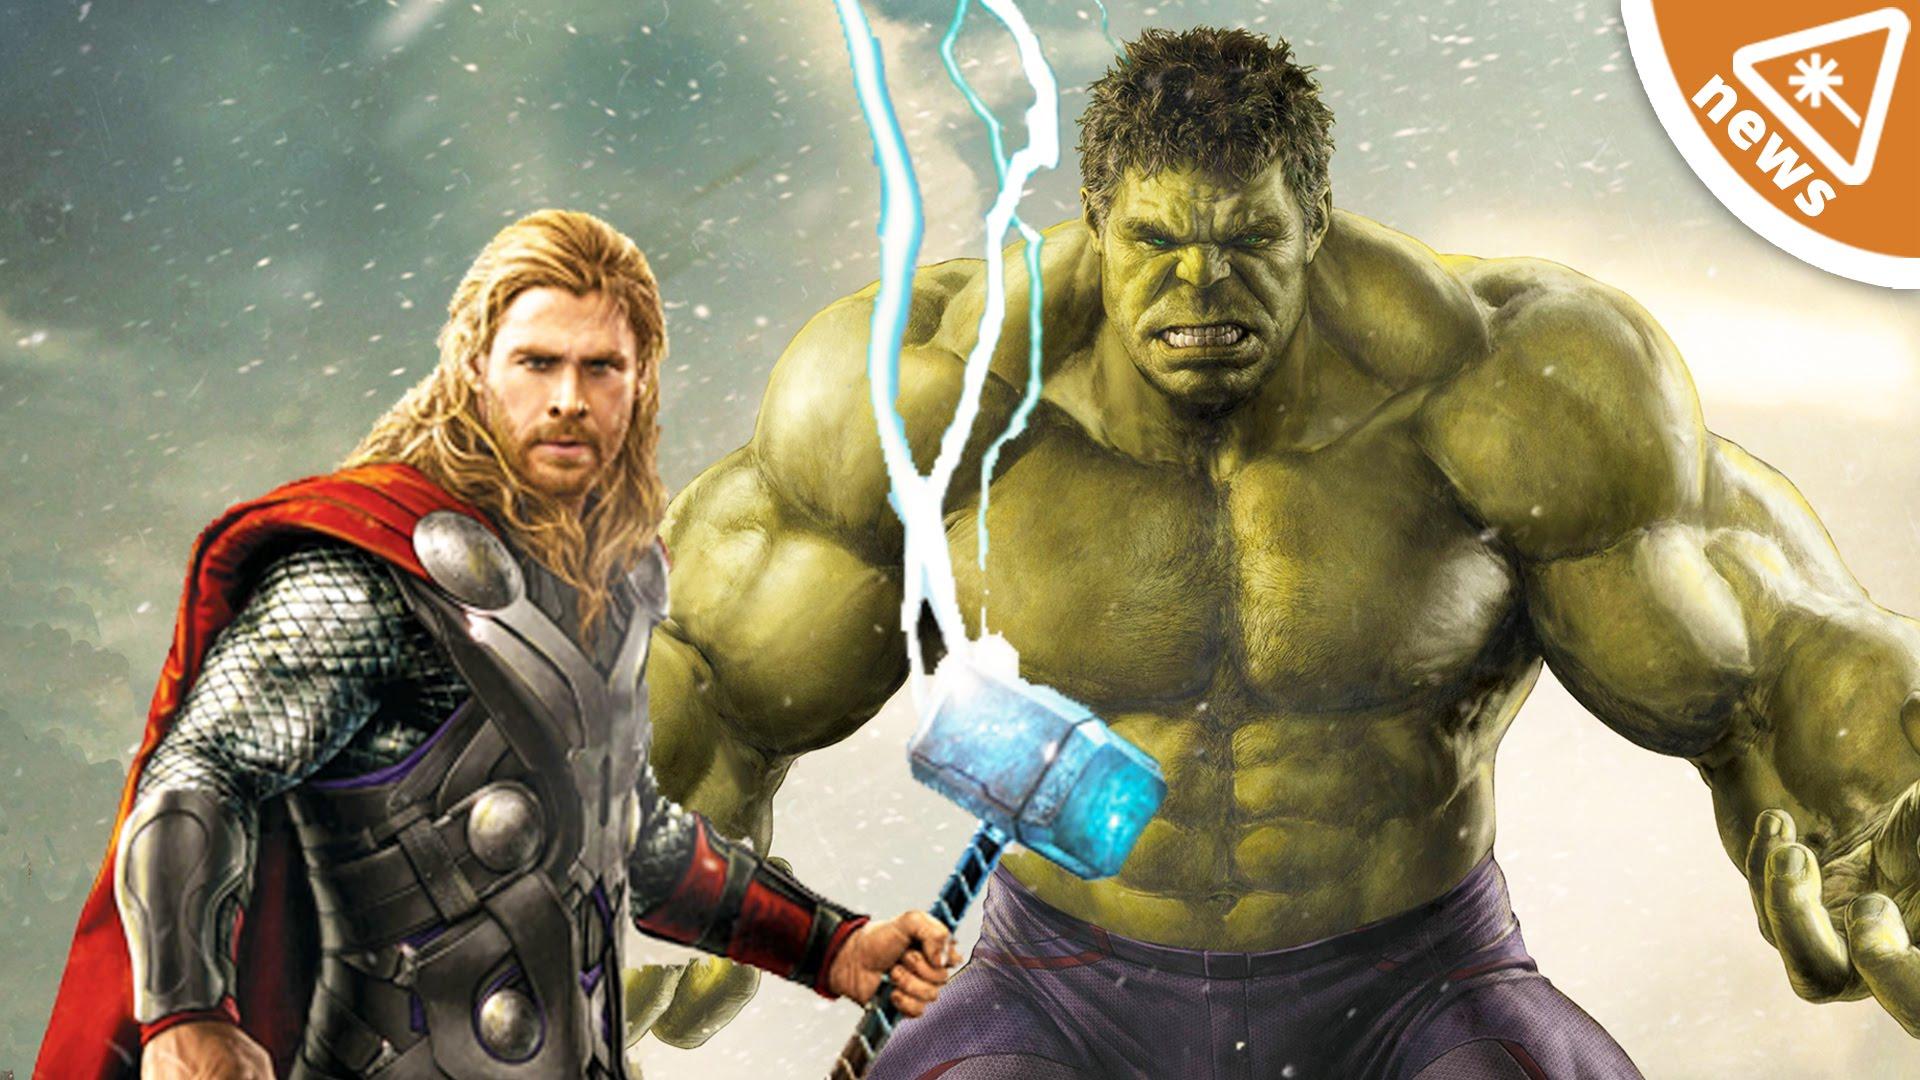 Thor hulk free online Puzzle Games on bobandsuewilliams